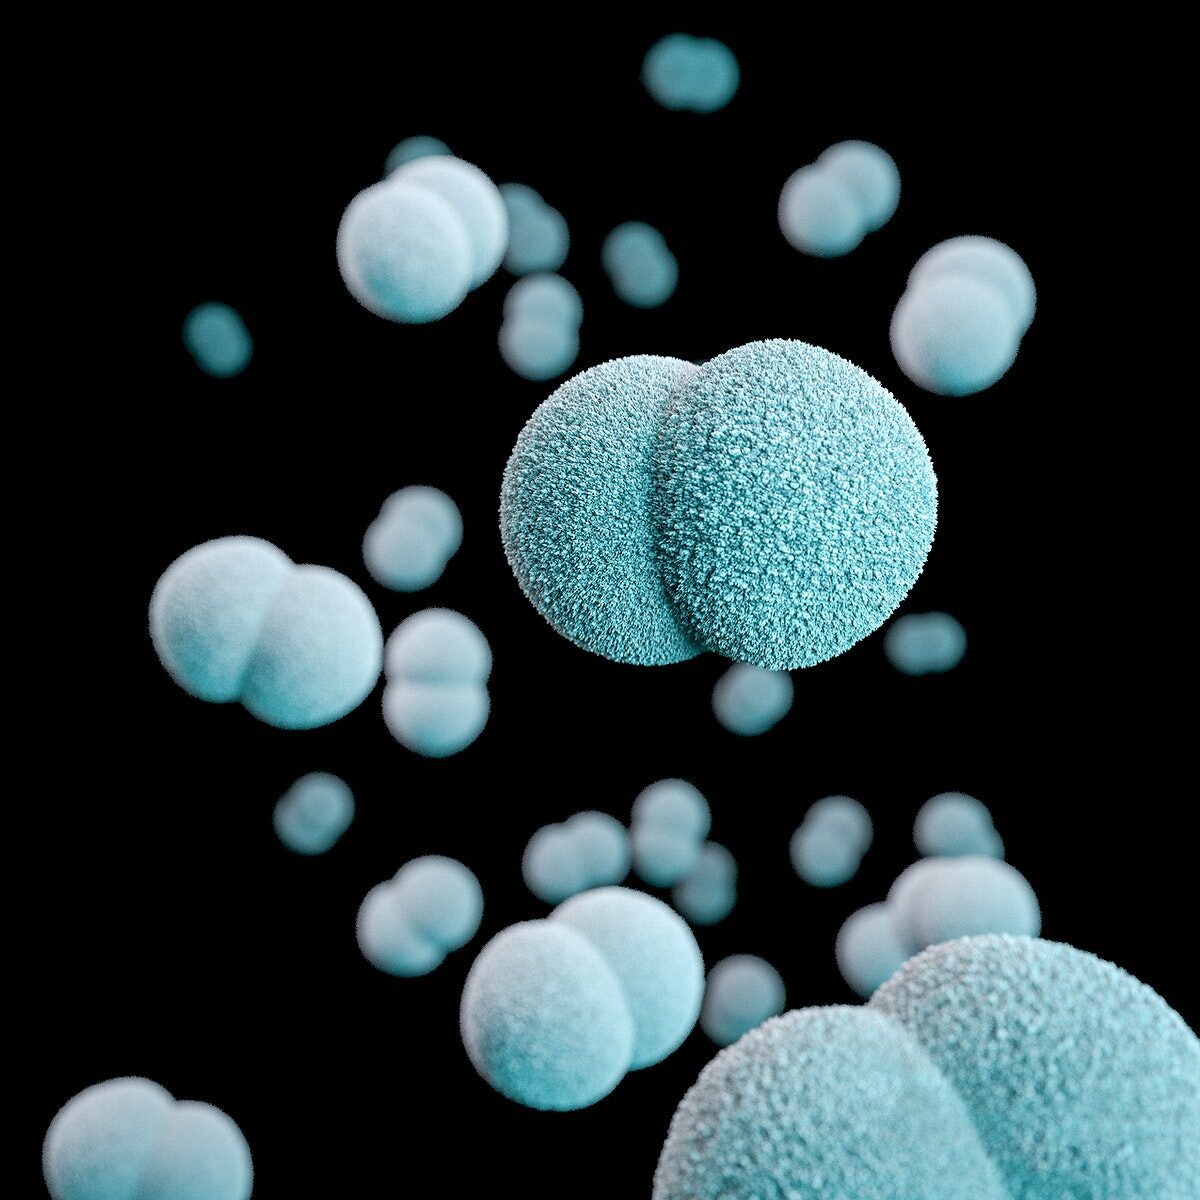 3d image of a group of gram-negative diplococci neisseria meningitides